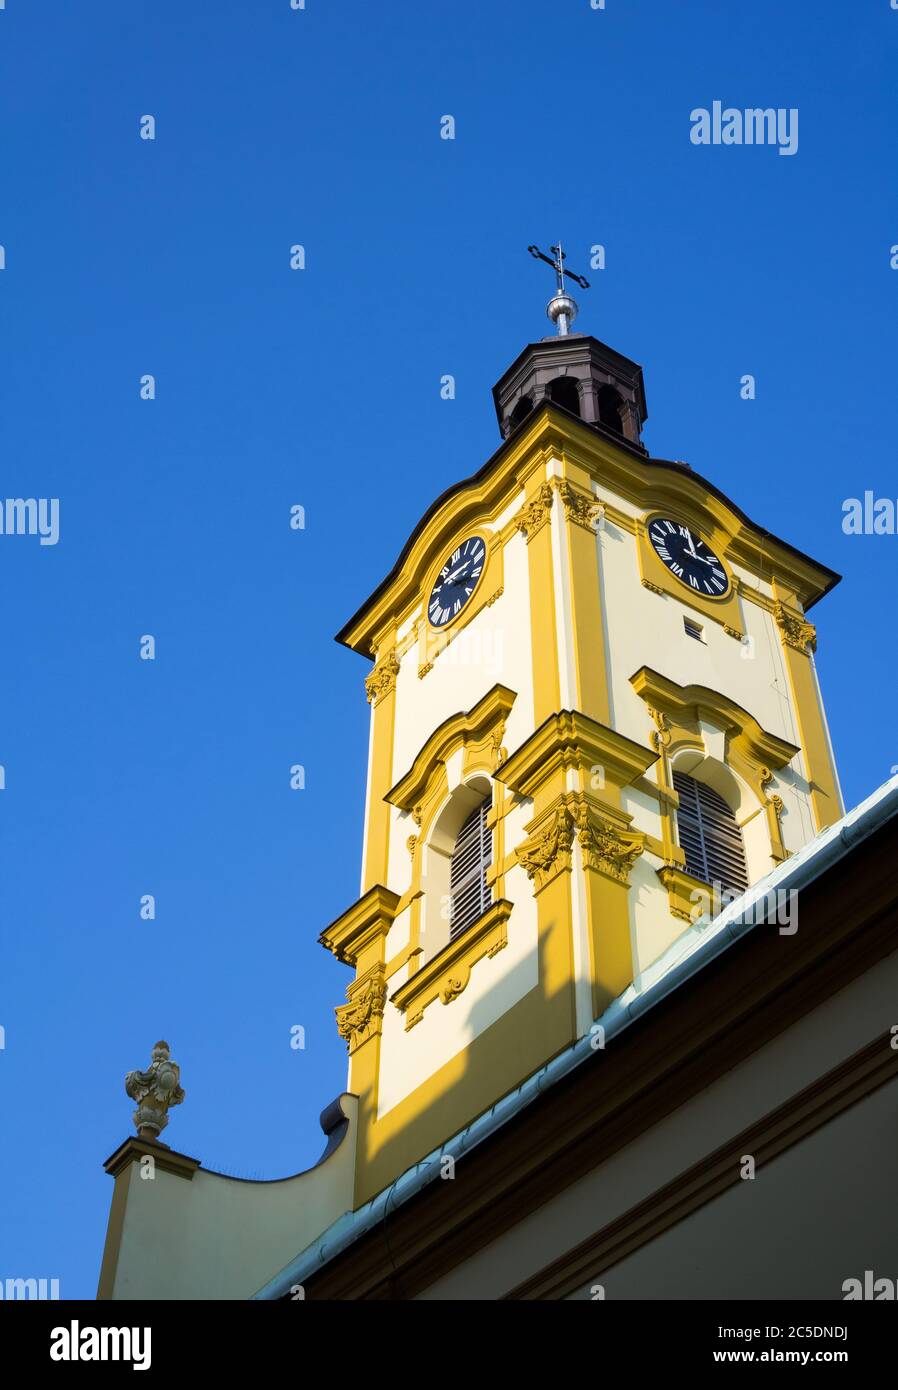 Church of Holy Cross ( Kosciol Swietego Krzyza ), Cieszyn, Silesia, Poland, Central Europe - renovated yellow bell tower of baroque church Stock Photo